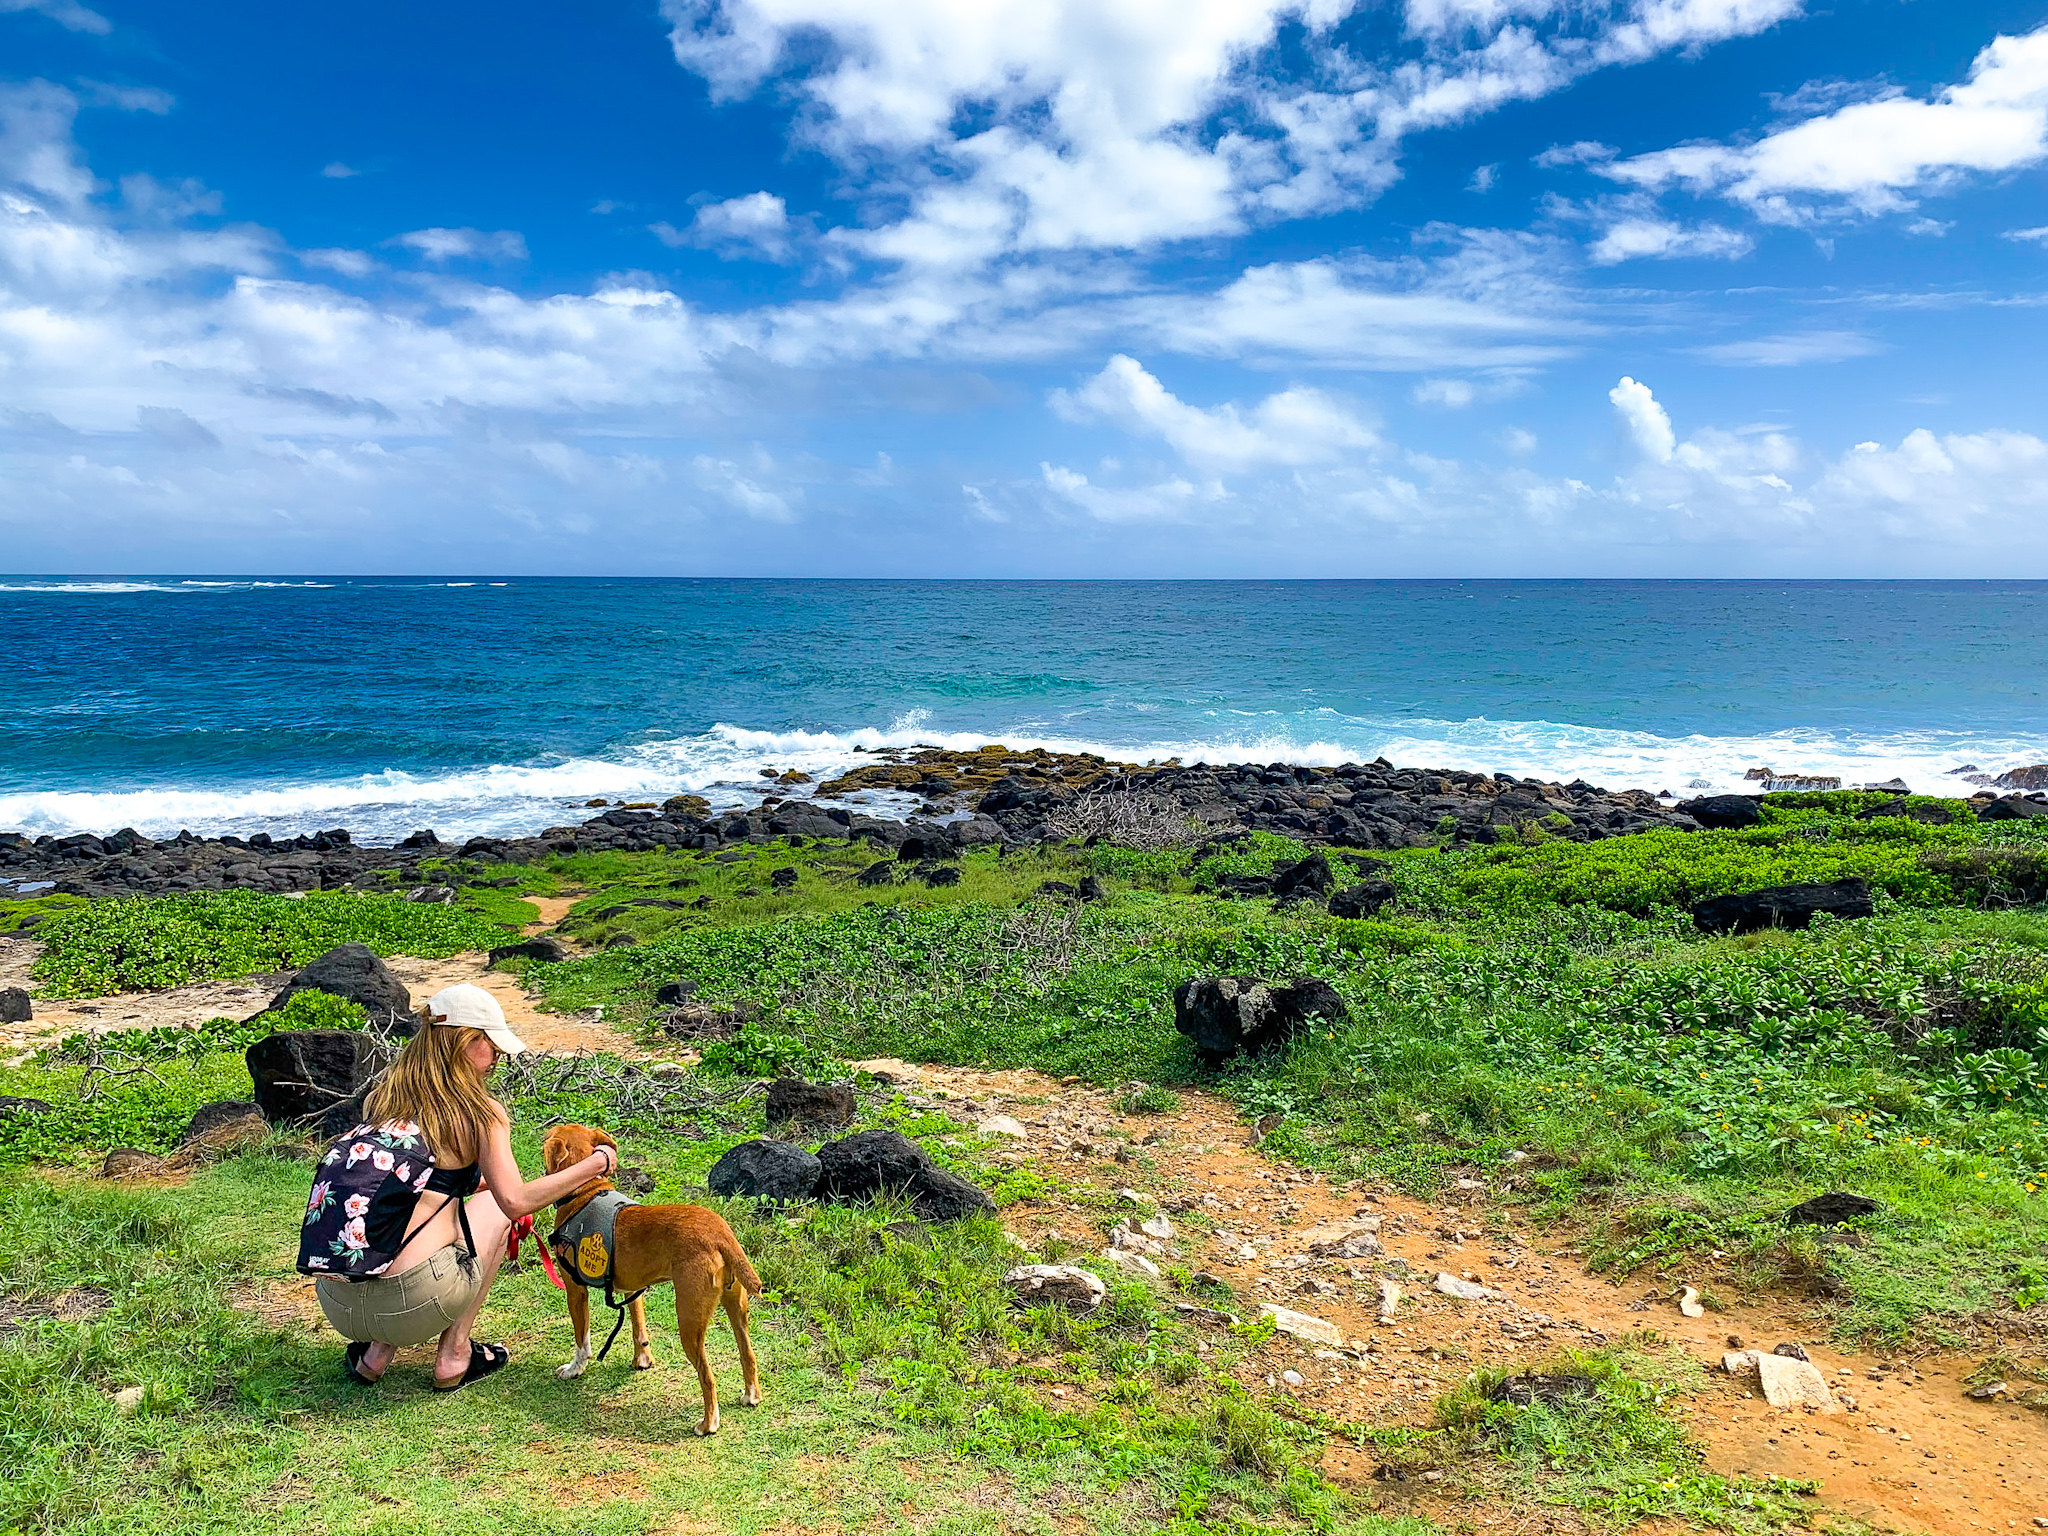 Kauai Humane Society shelter dog field trips Poipu Beach